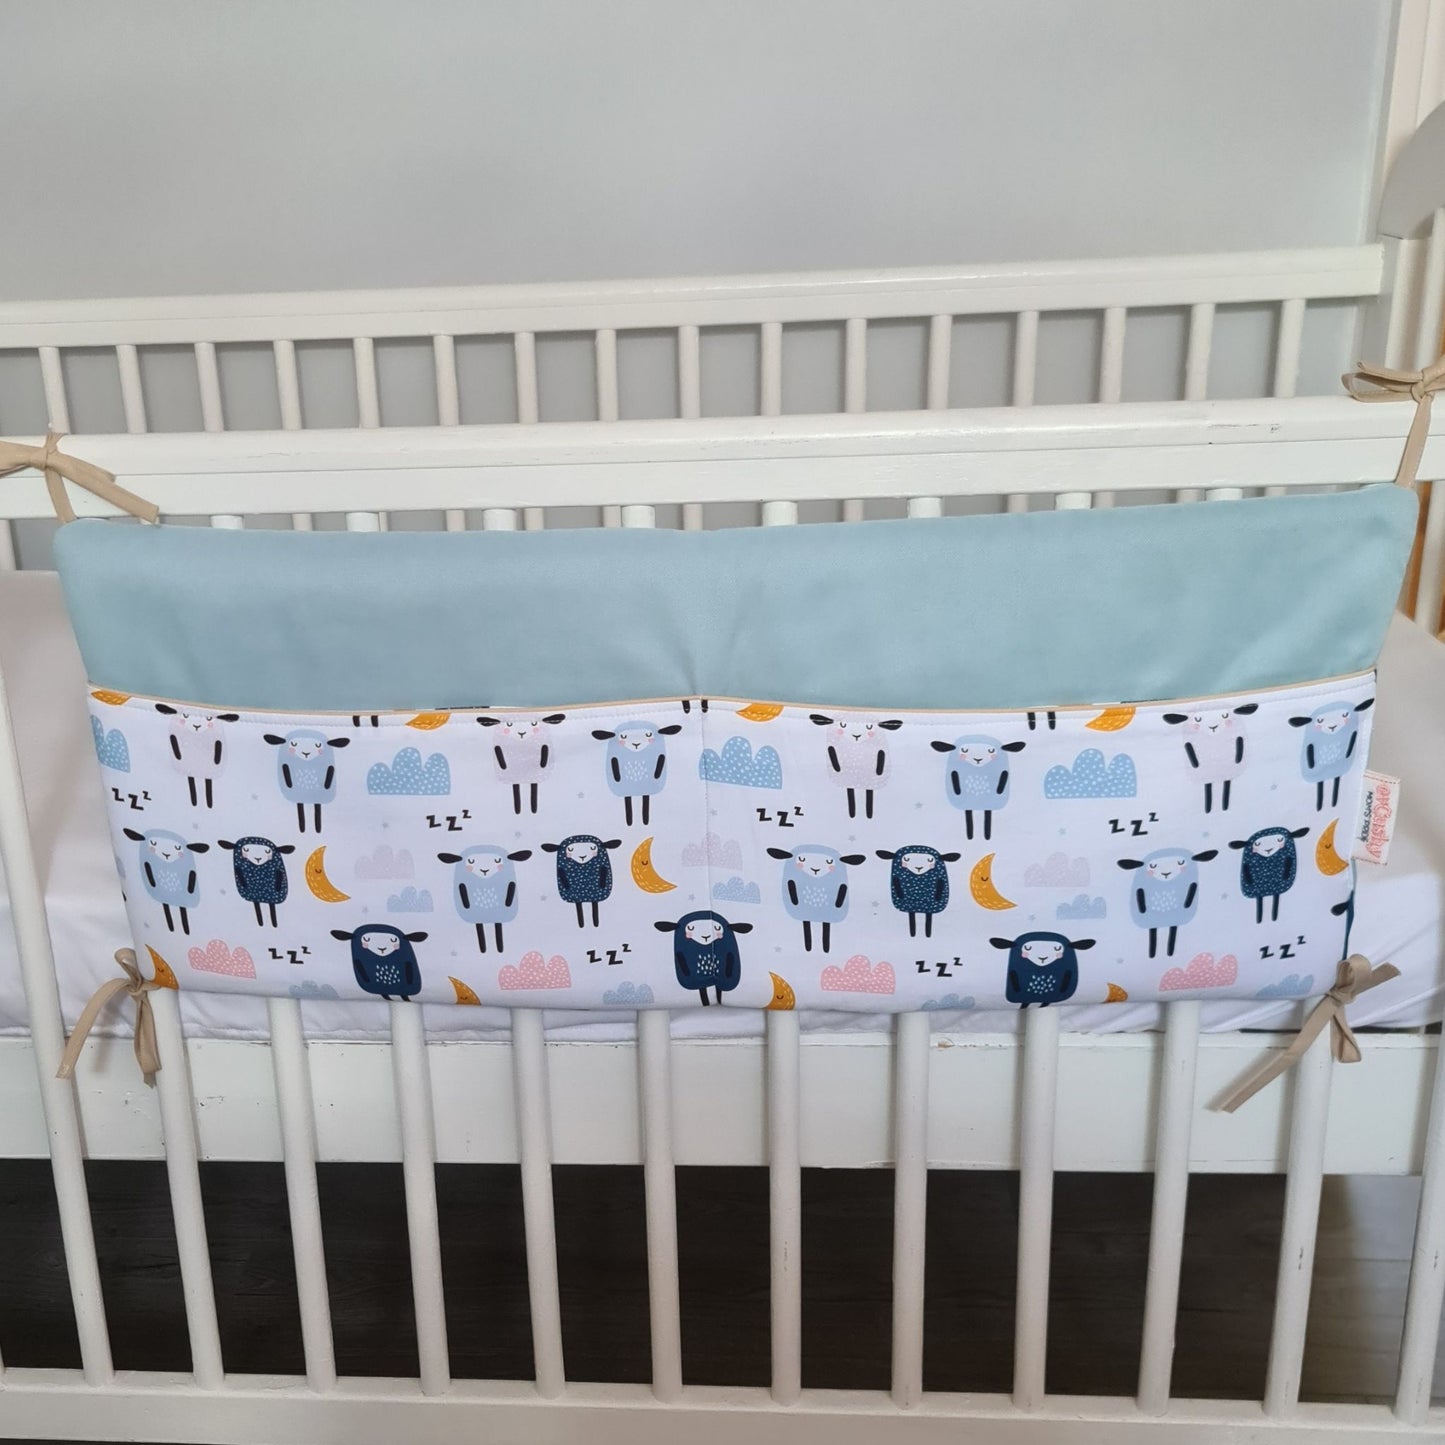 evcushy storage baby cot organizer cotton hanging pouches for crib